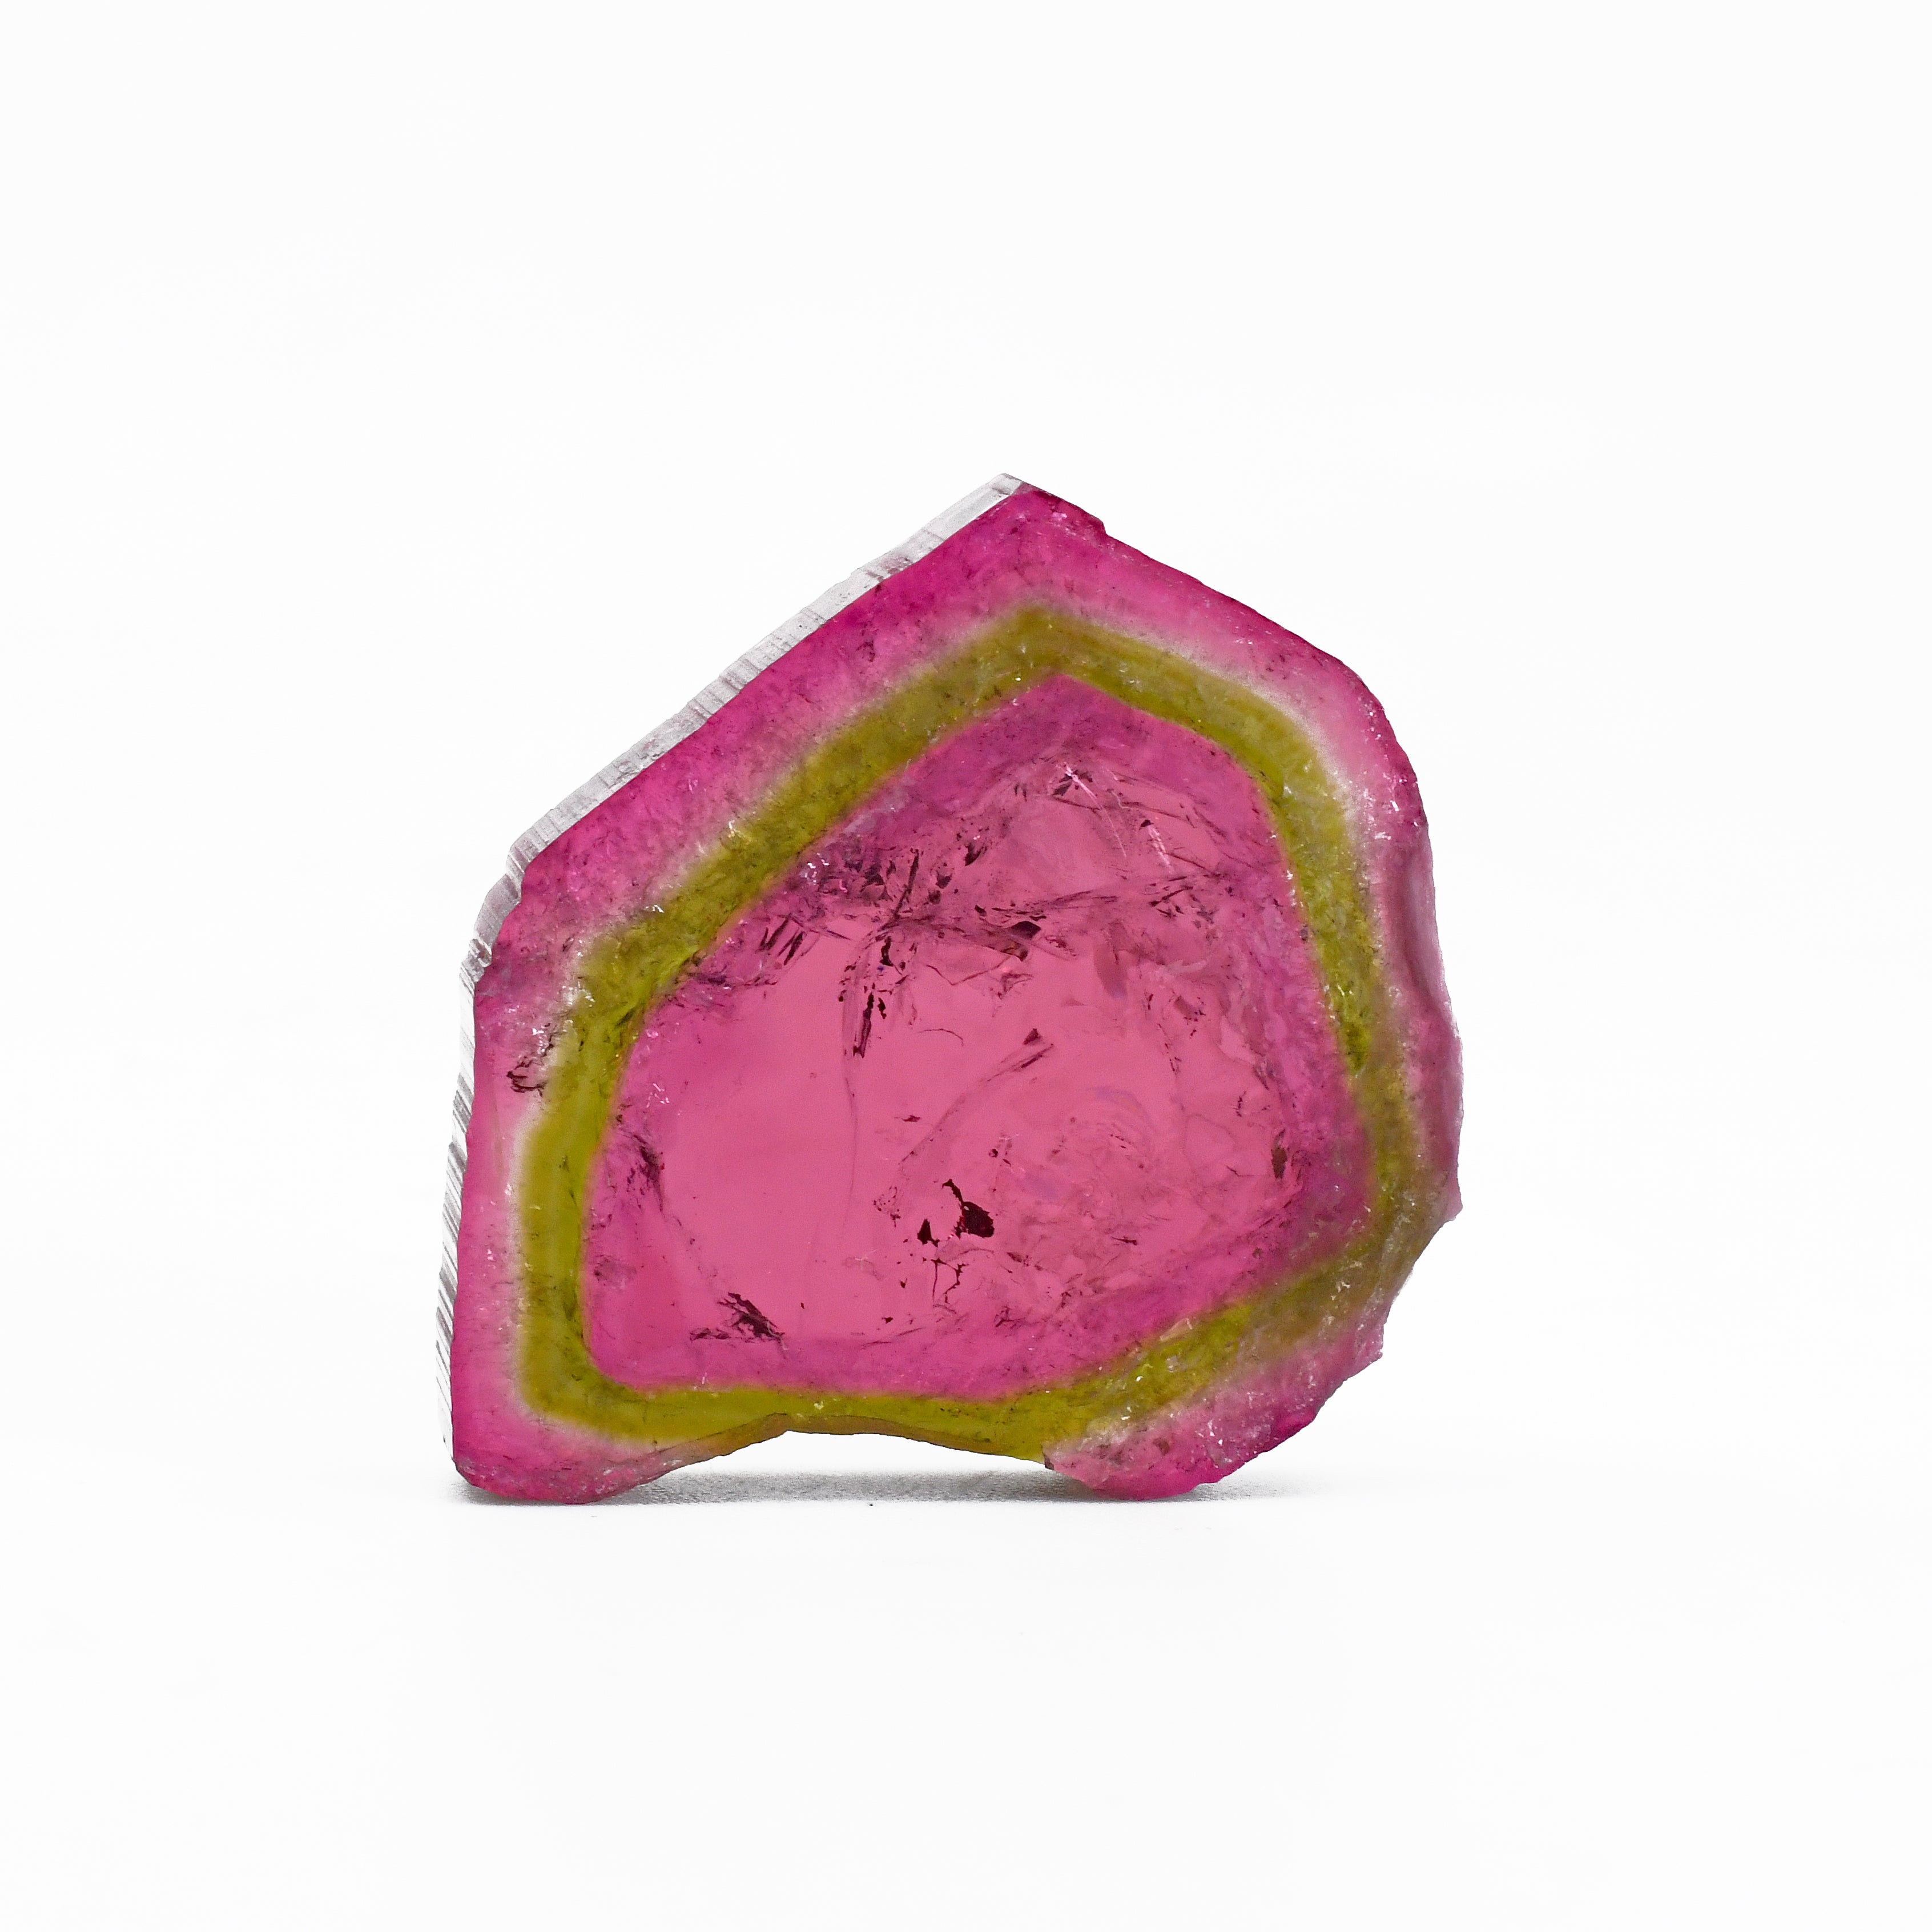 Watermelon Tourmaline 1.38inch 50.76 ct Natural Crystal Polished Slice - Brazil - GGX-077 - Crystalarium